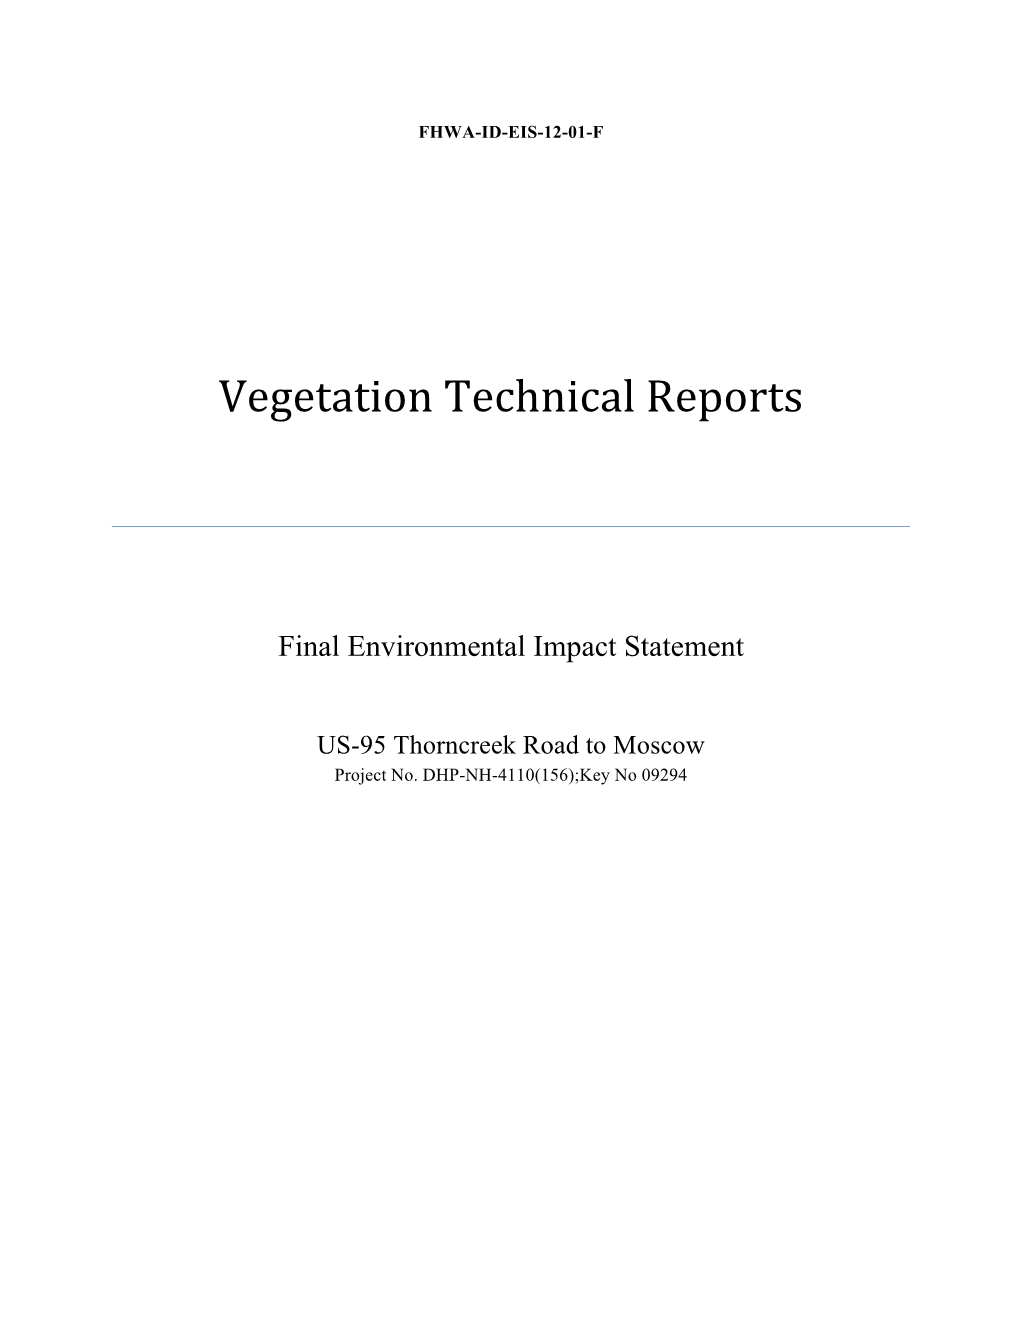 Vegetation Technical Reports